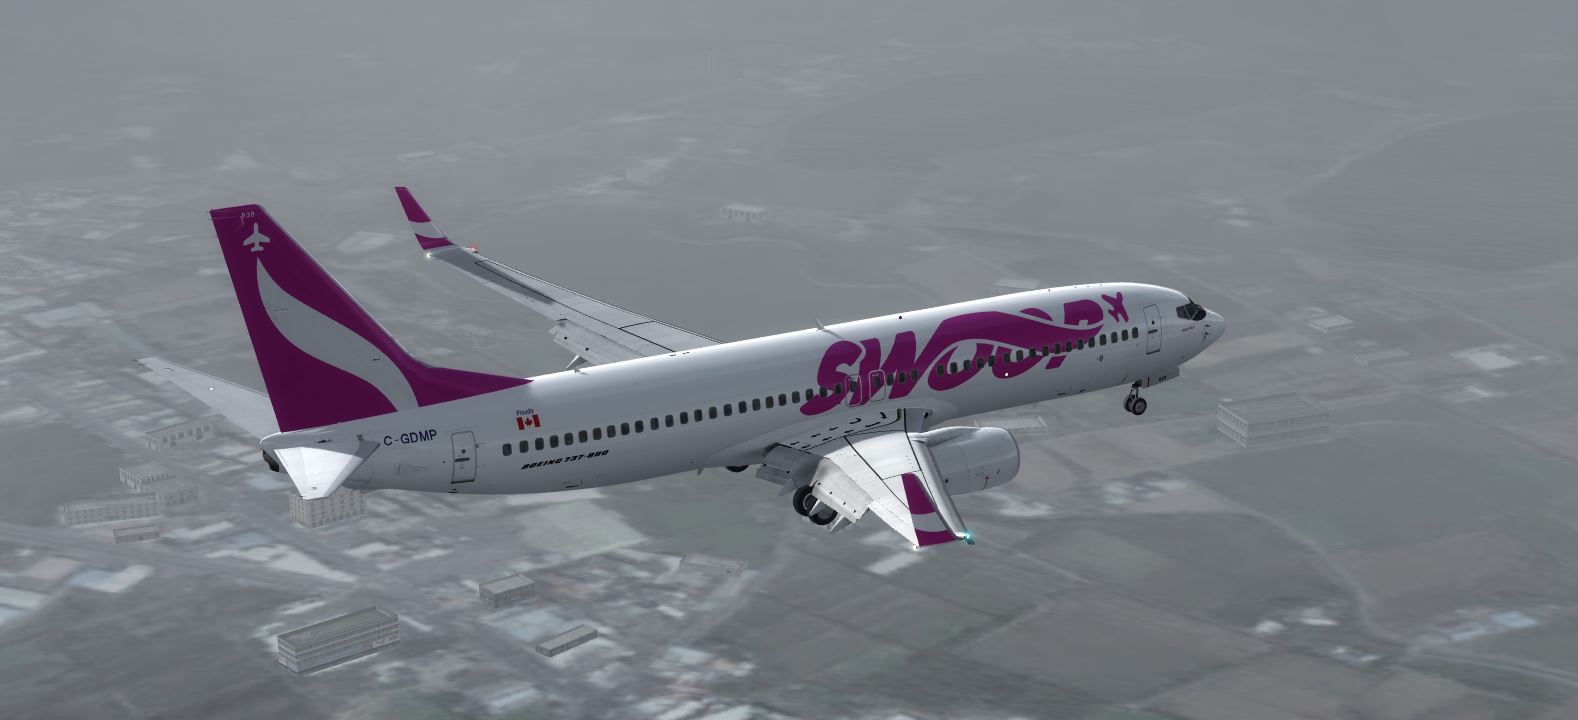 B737-800 Swoop Airlines-3533 